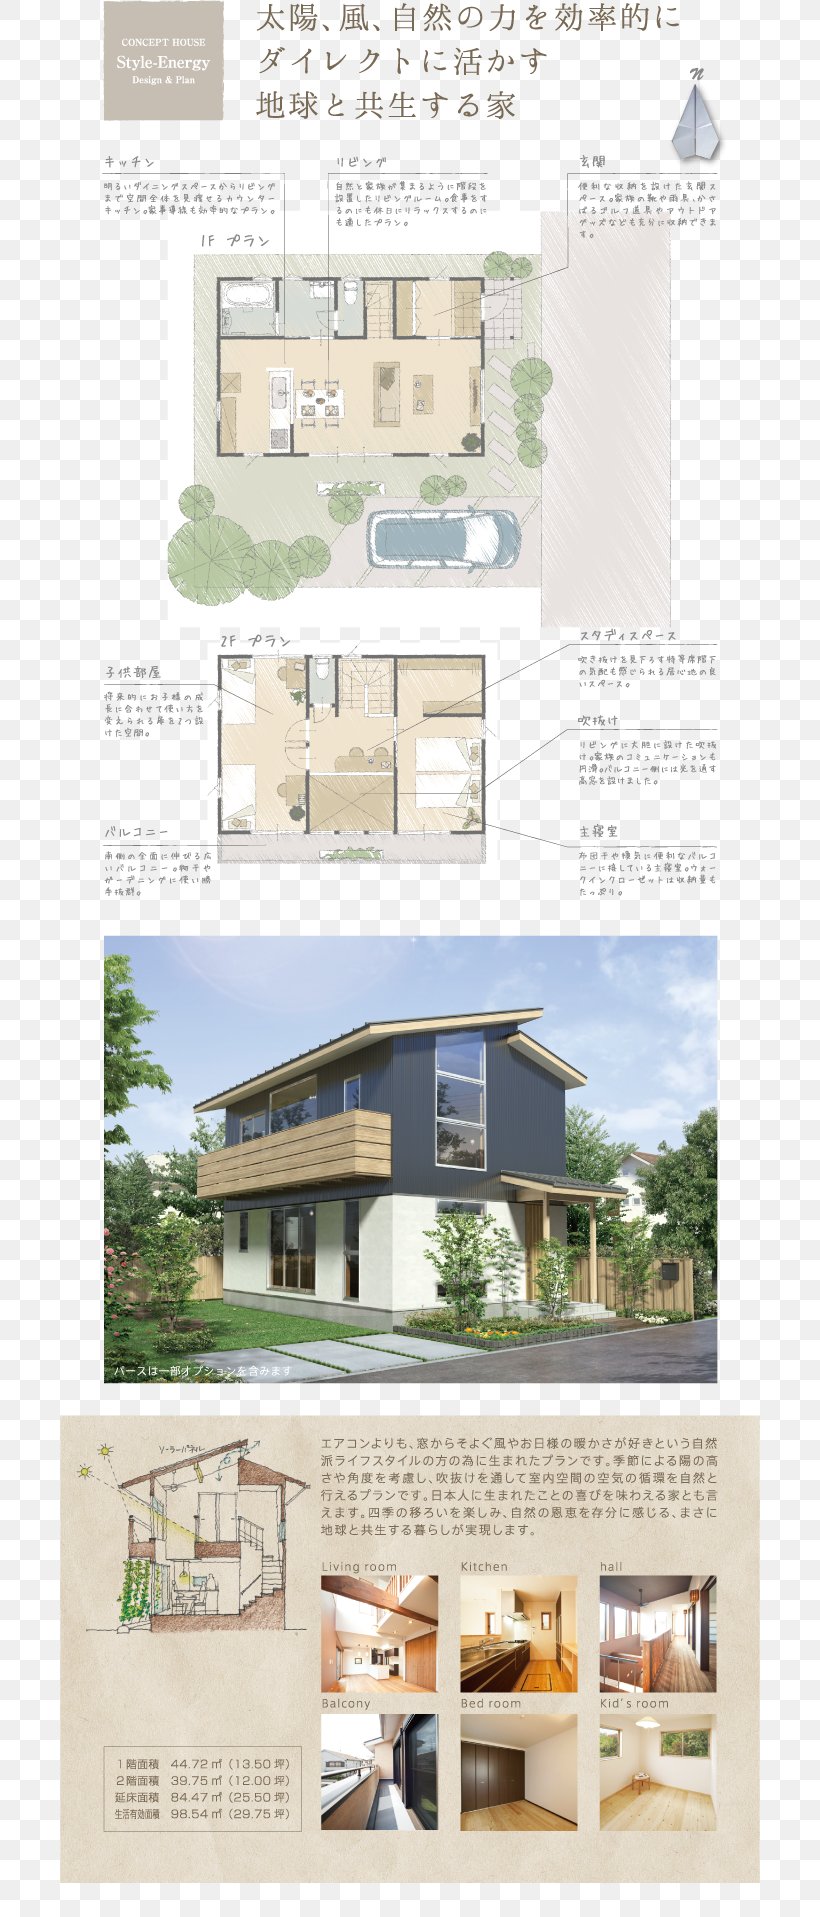 株 丸道工務店 House Plan Architectural Engineering Architecture Png 700x1917px House Architectural Engineering Architecture